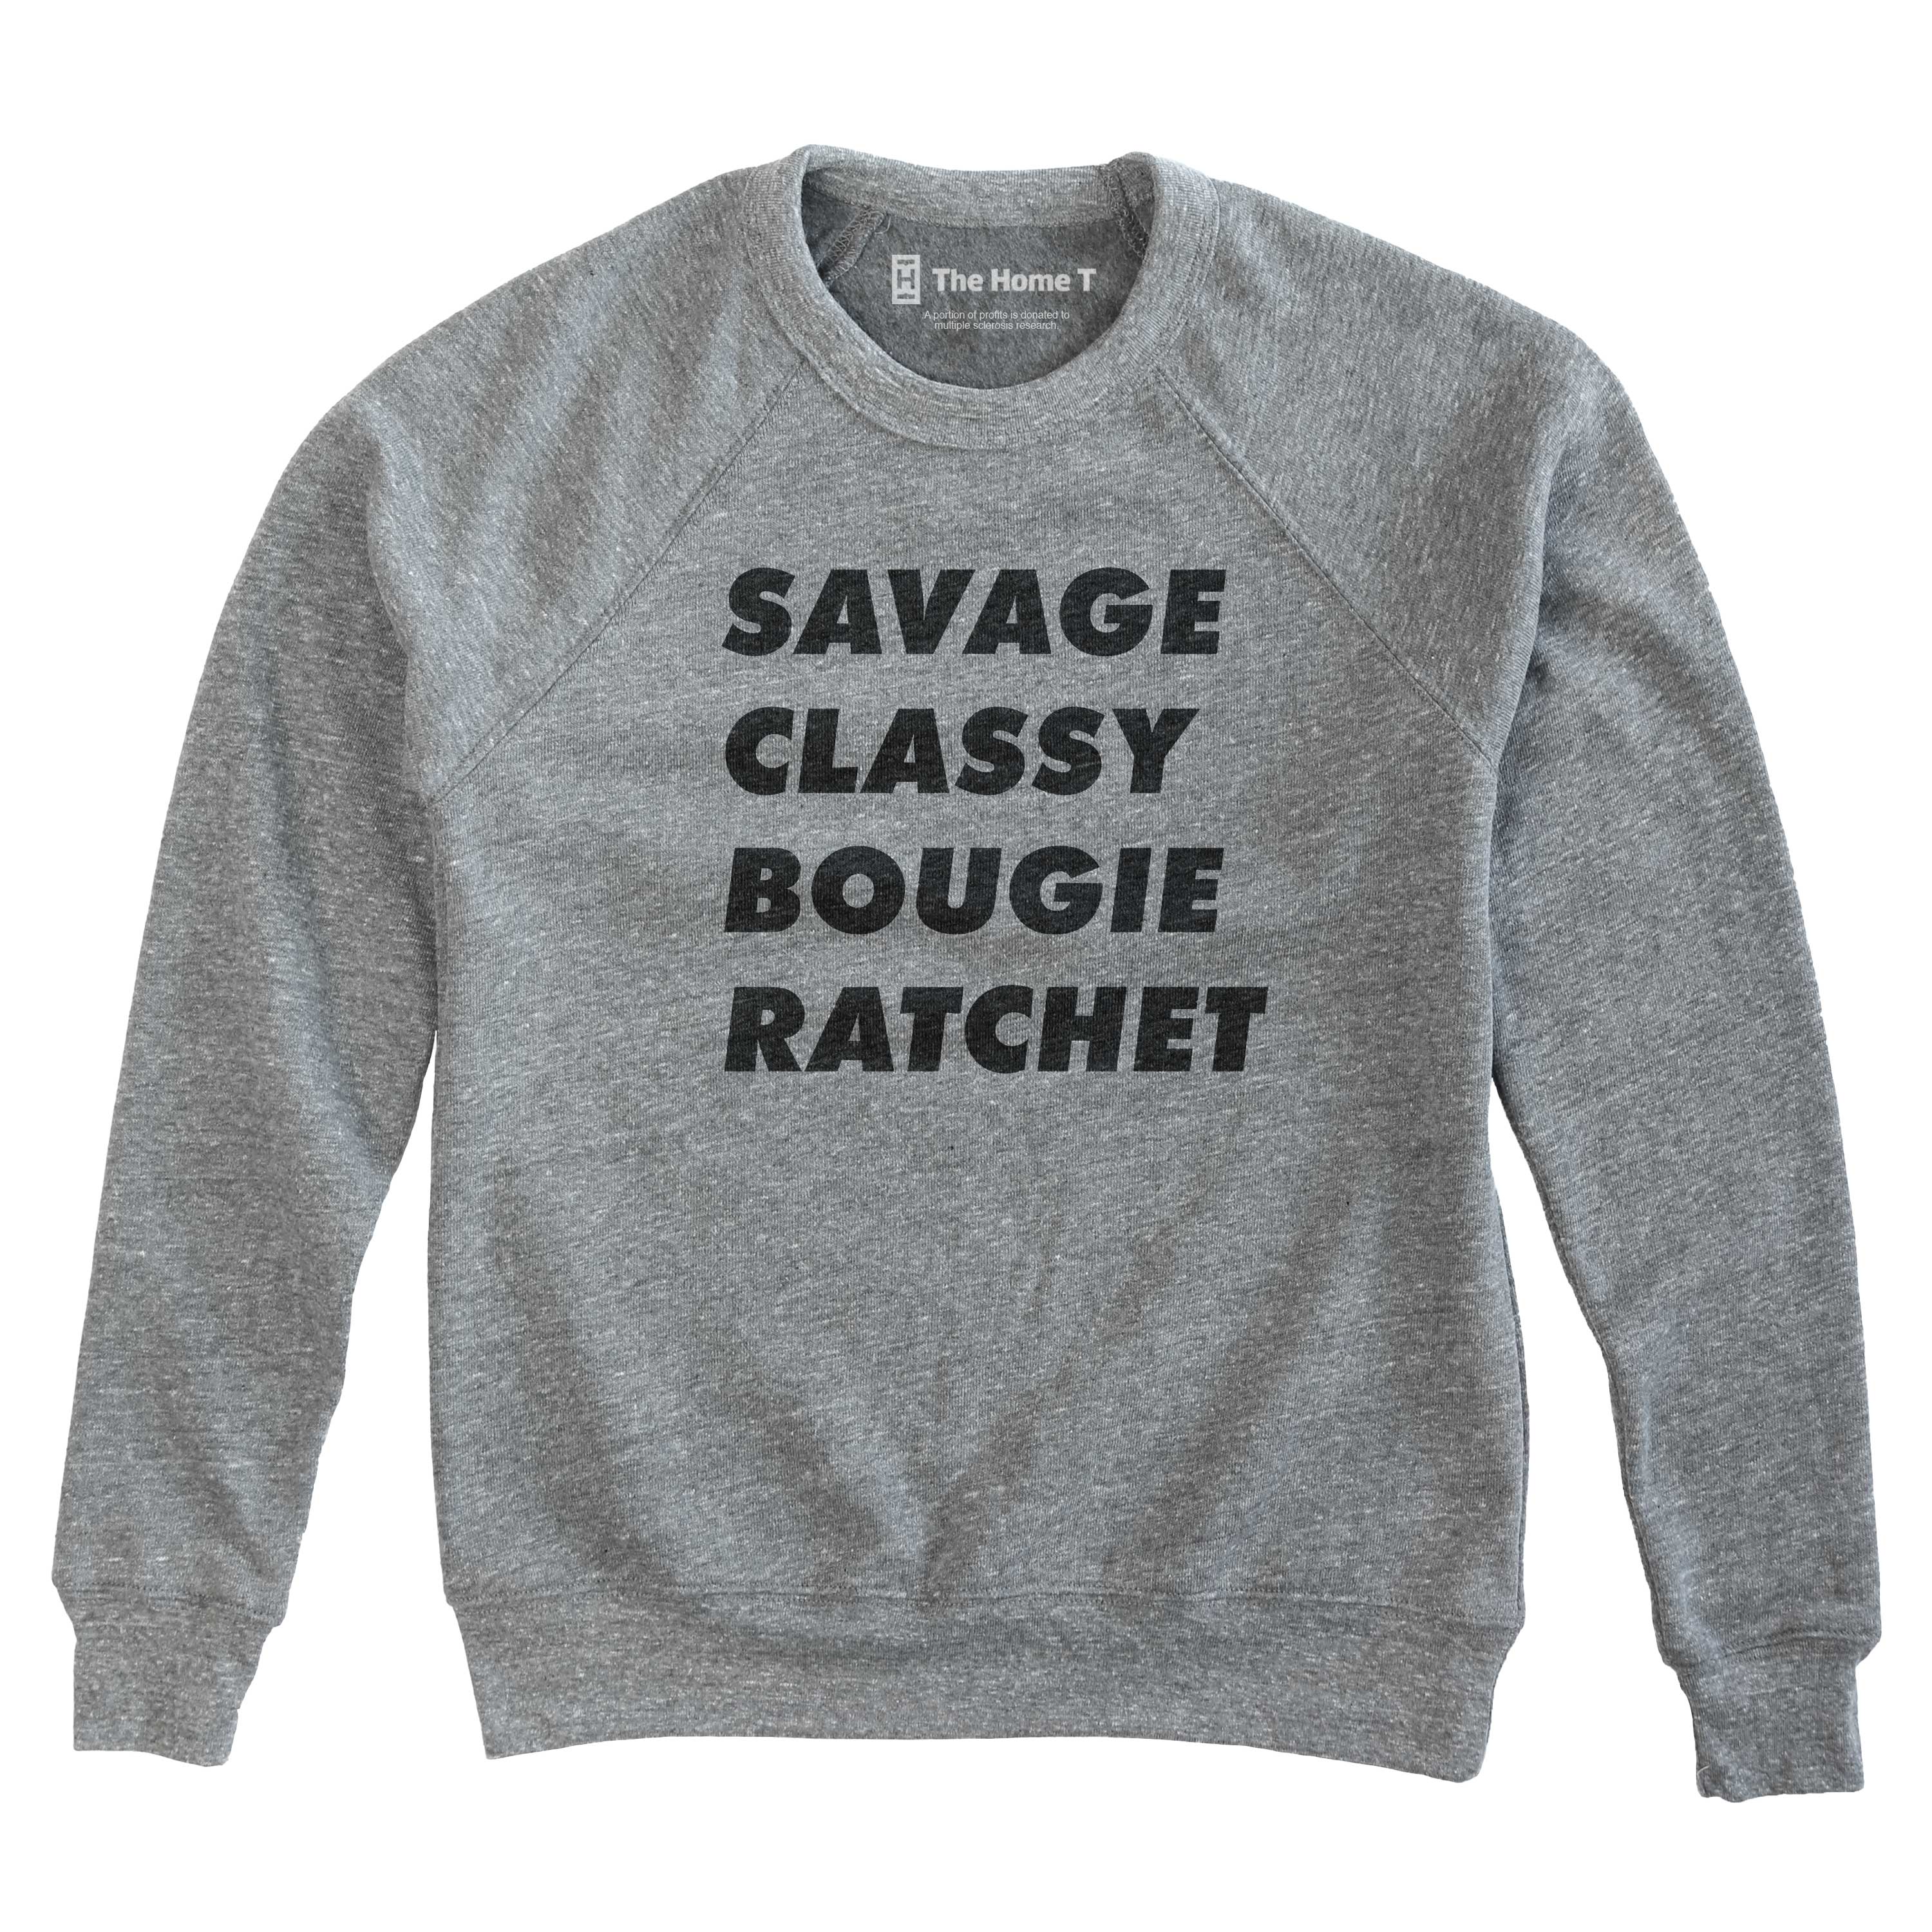 Savage Classy Bougie Ratchet Crew neck The Home T XS Sweatshirt